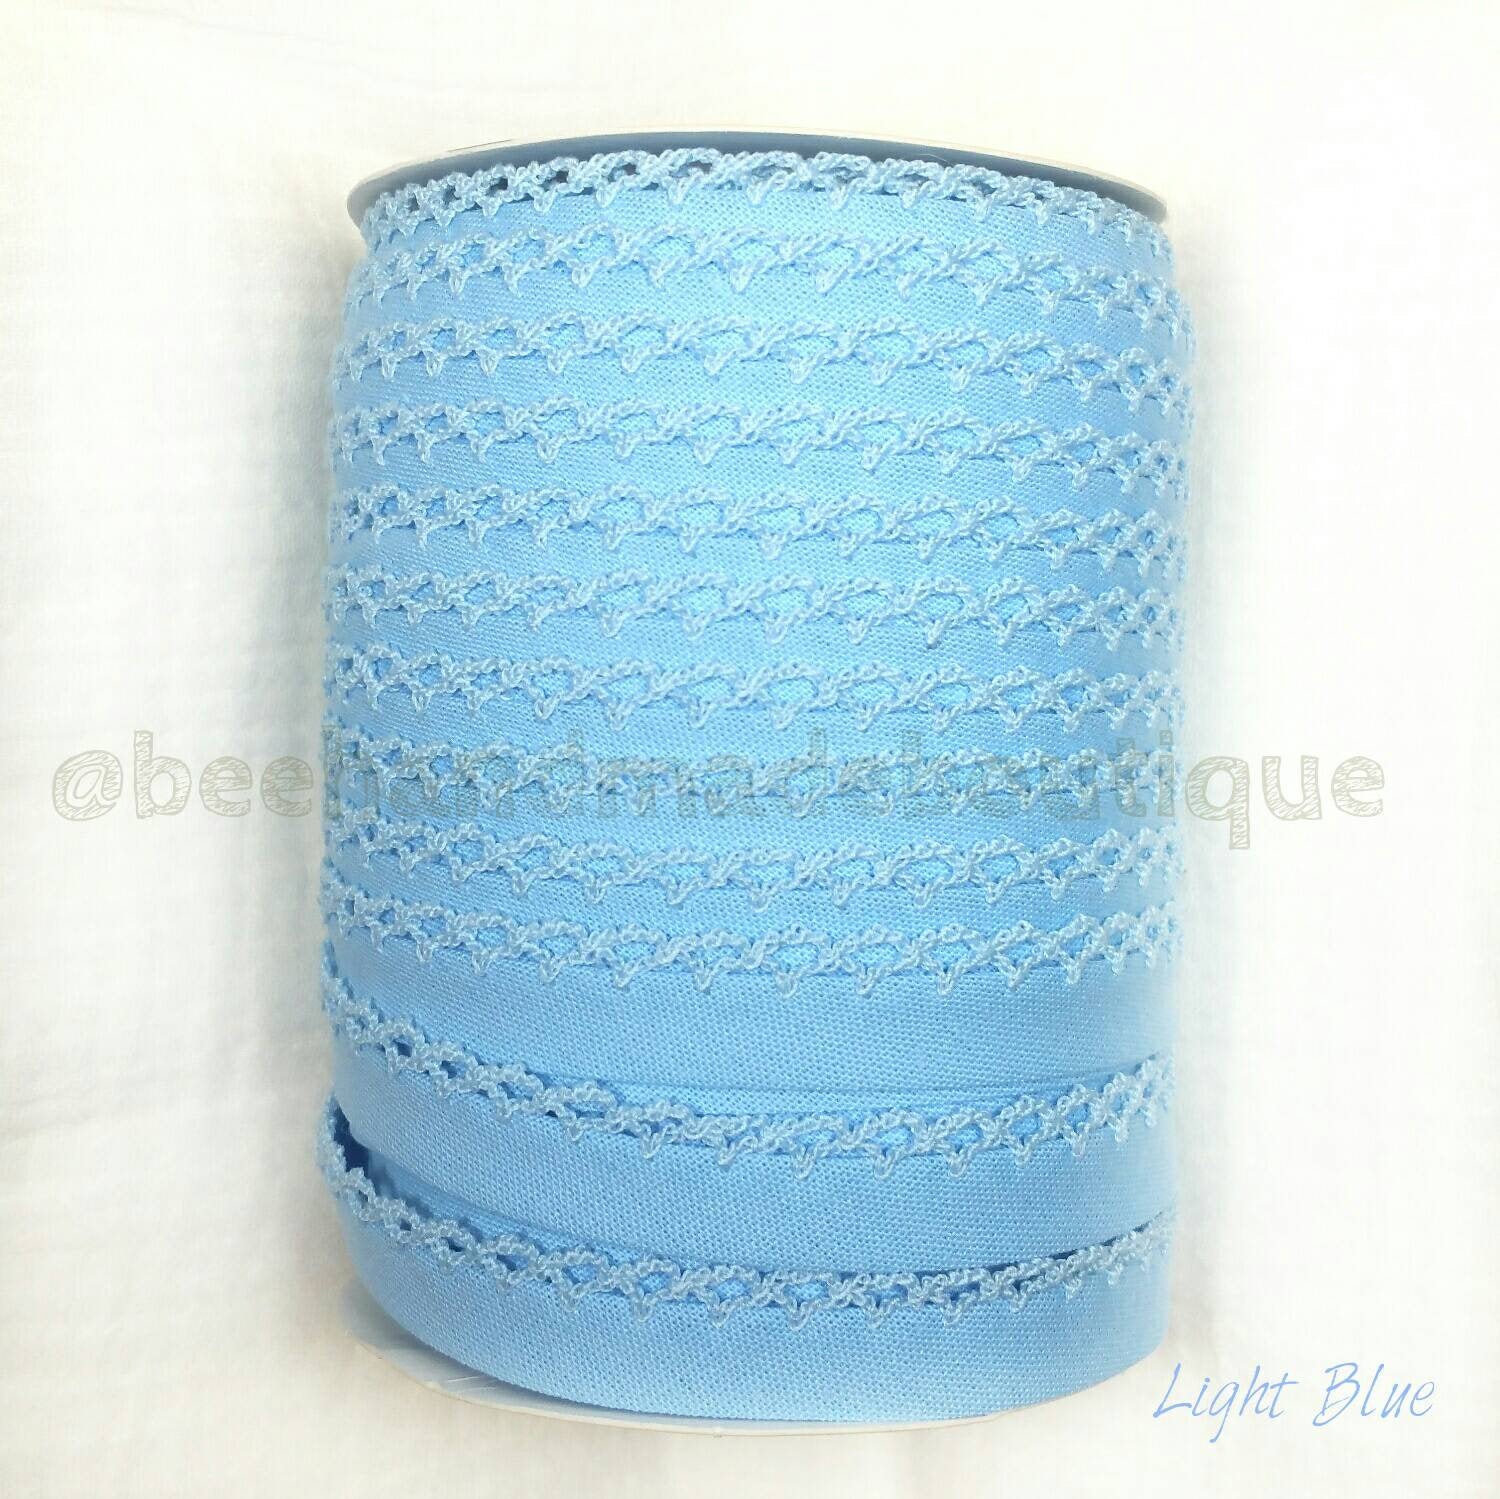 Crochet Edge  Bias Tape, Blue Bias Tape, Picot Bias Tape, Double Fold Bias Tape, Quilt Binding, LIGHT BLUE Bias Tape, By the Yard, Lace